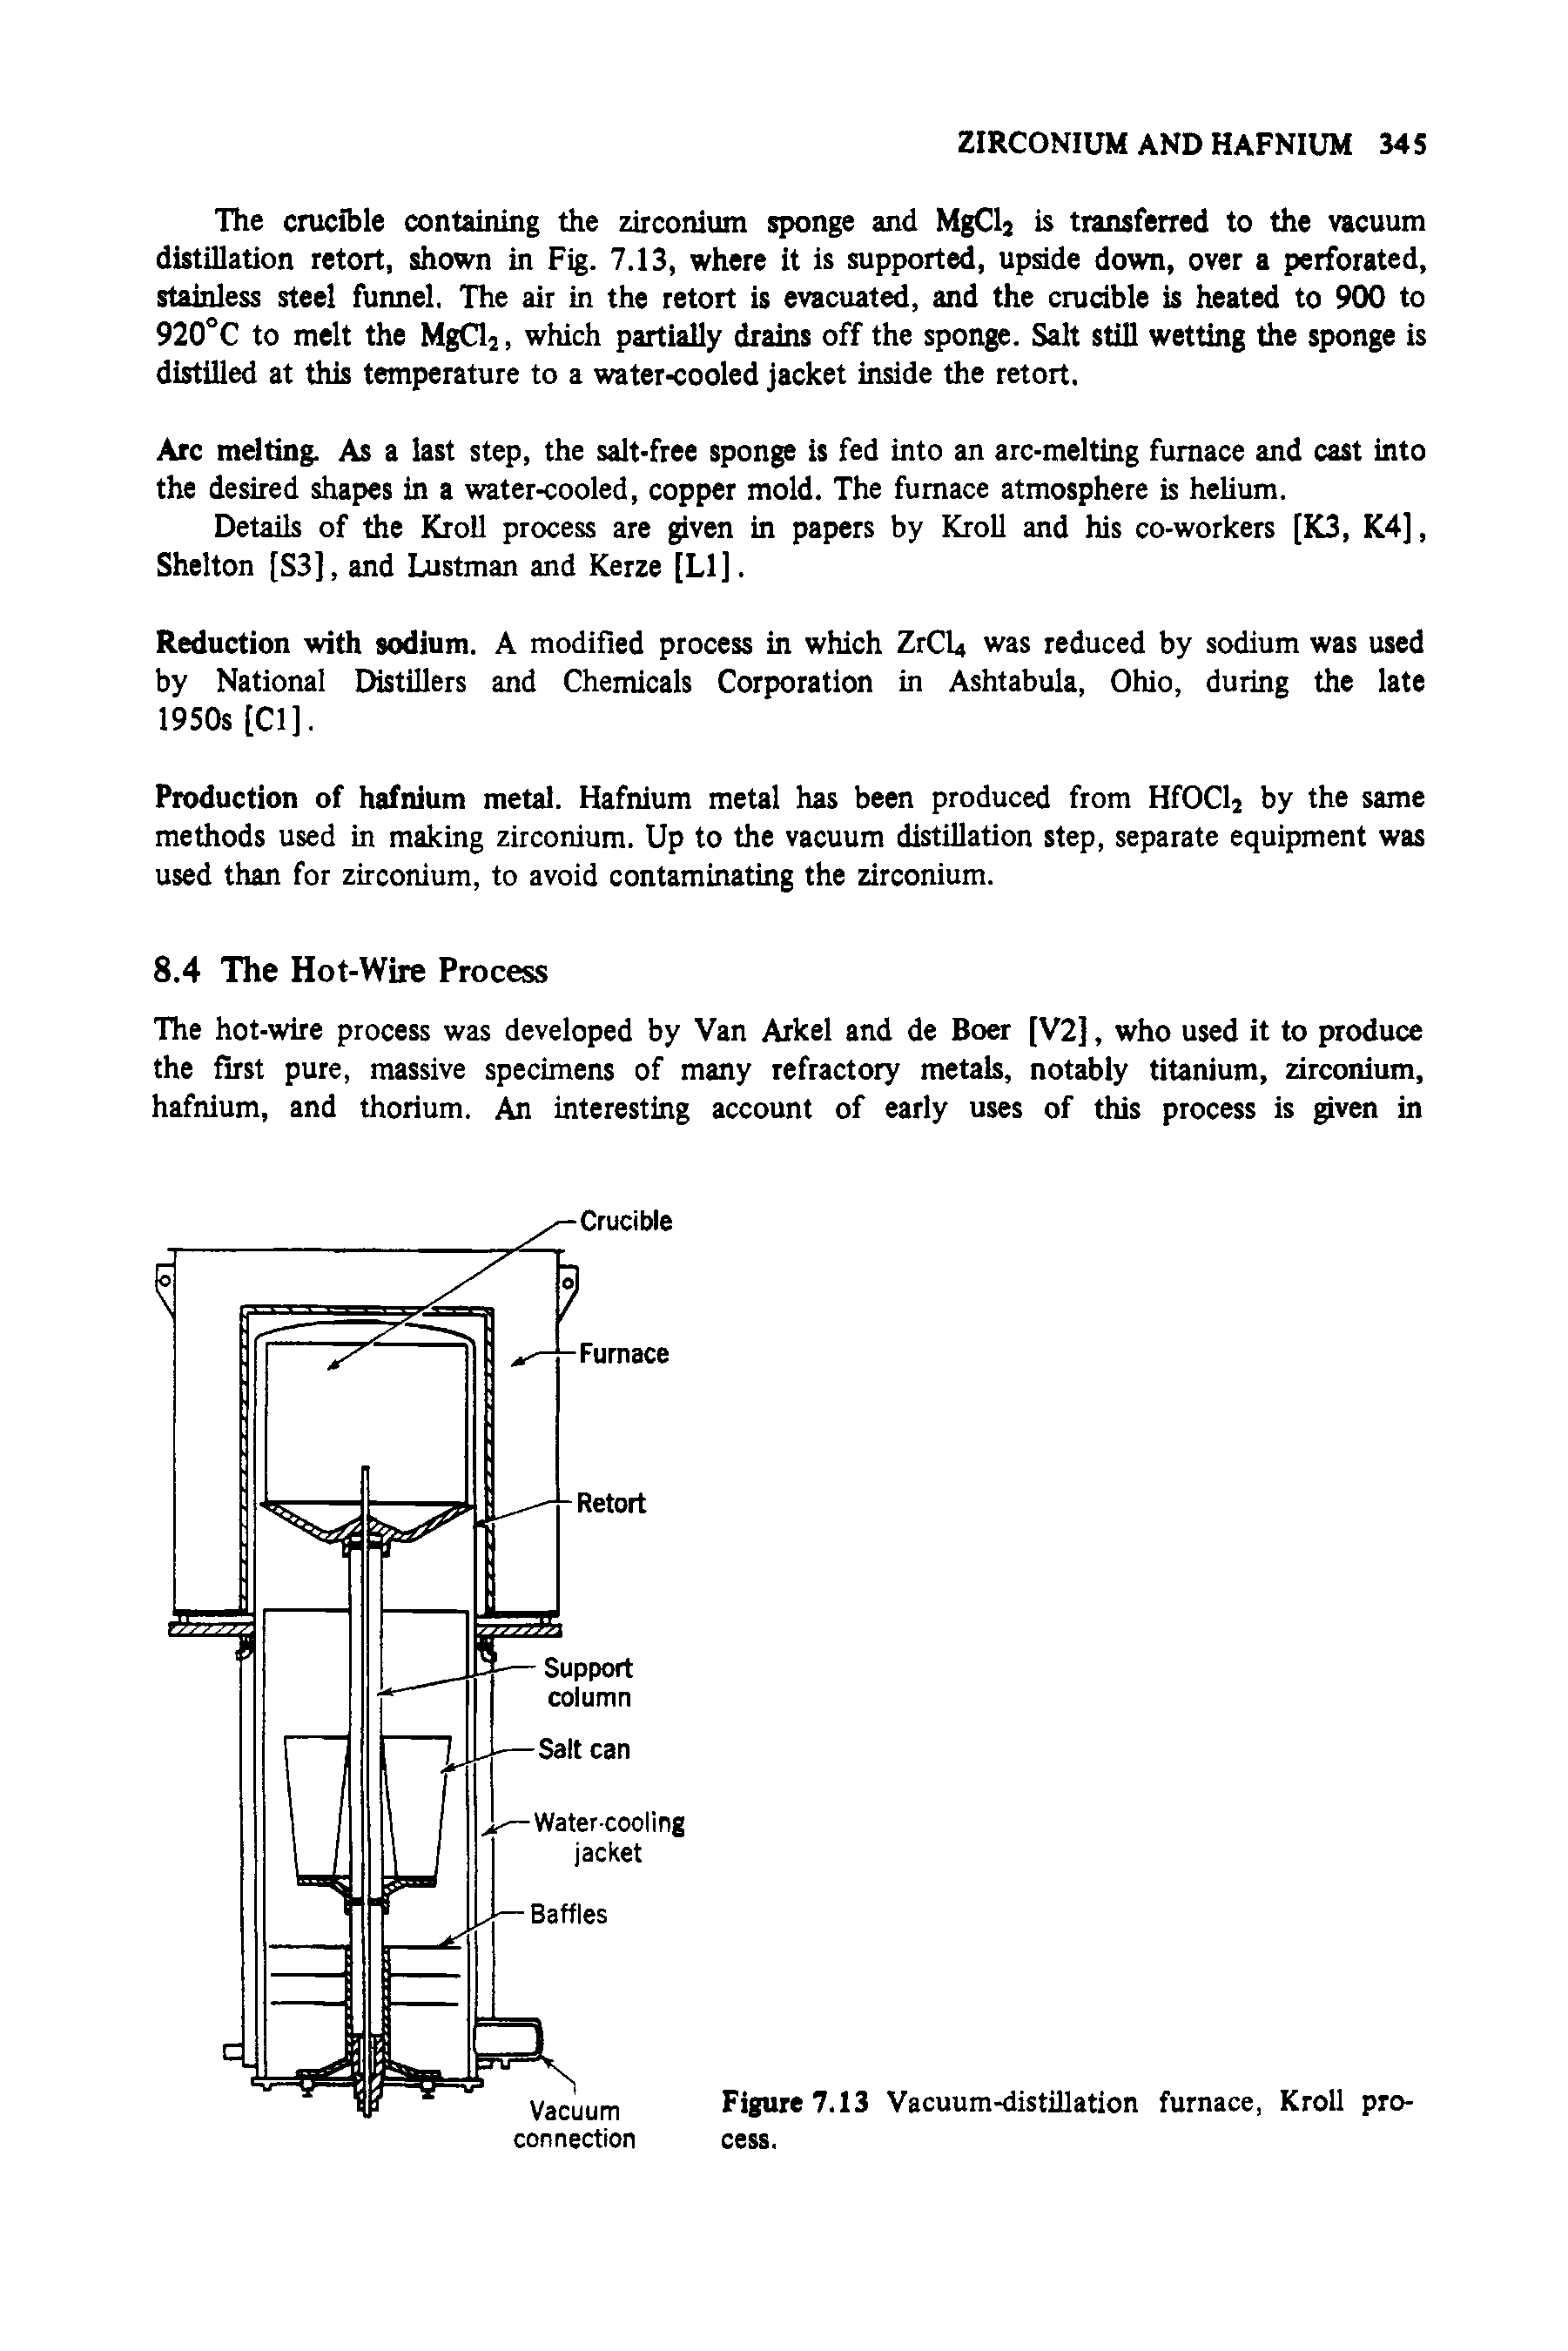 Figure 7.13 Vacuum-distillation furnace, Kroll process.